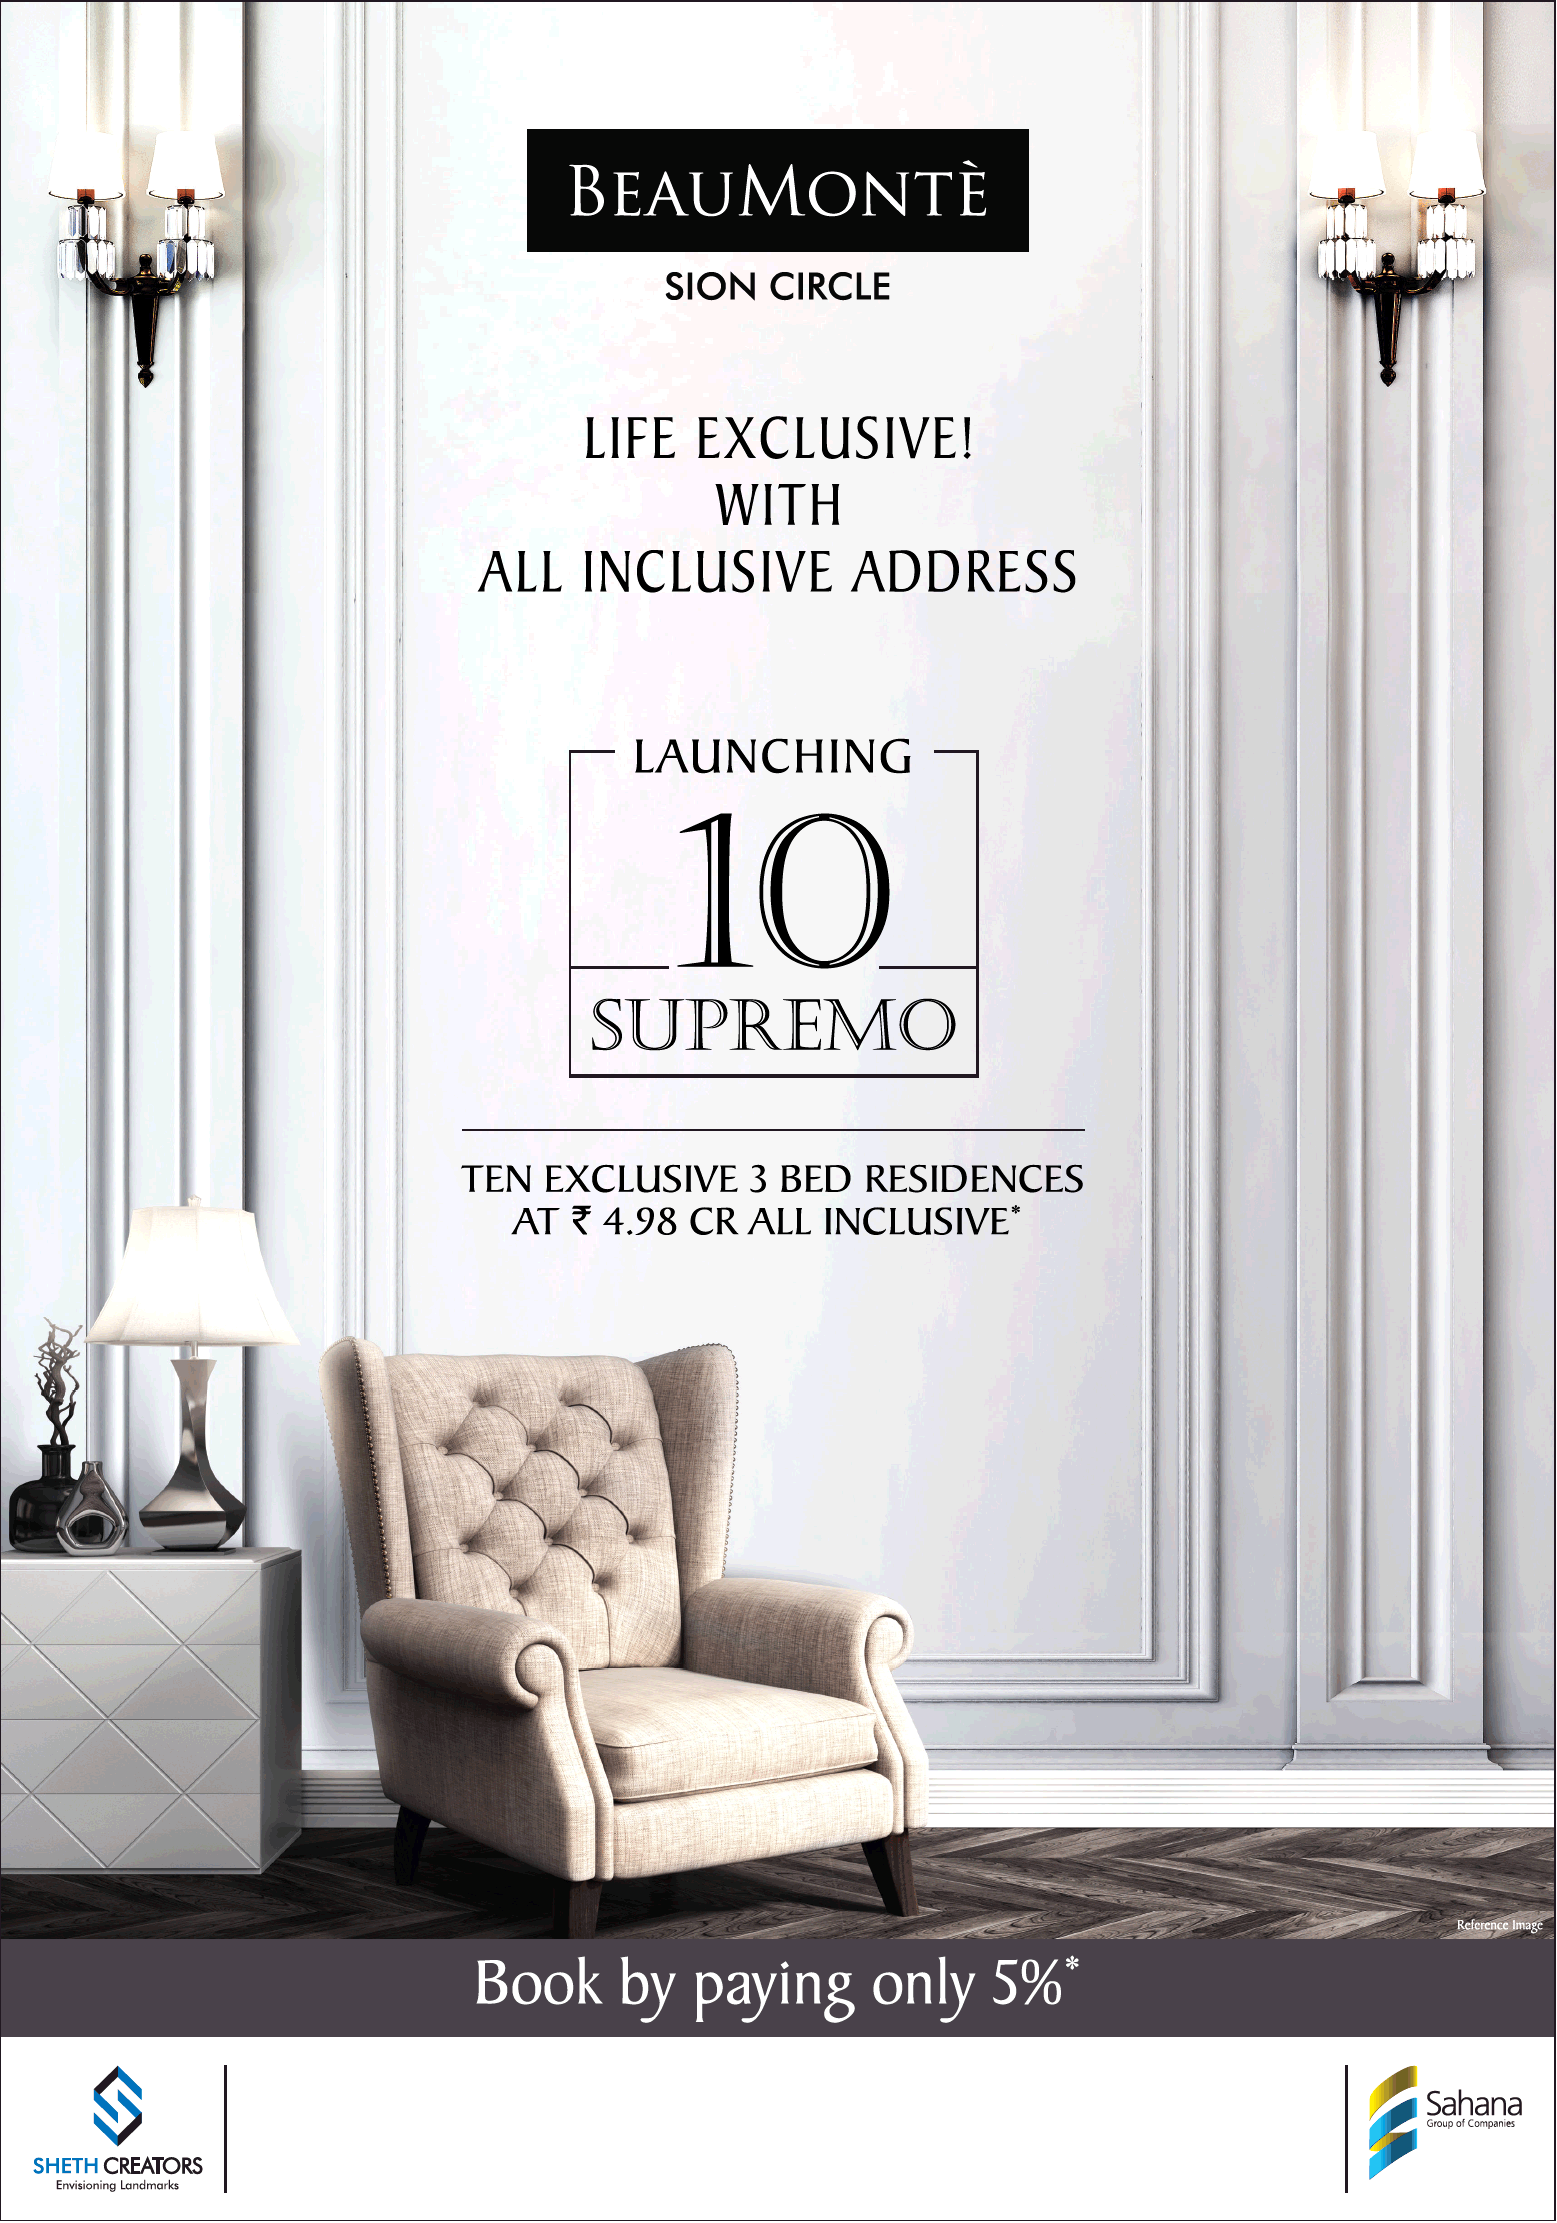 Beaumonte Sion Circle launching 10 Supremo in Mumbai Update